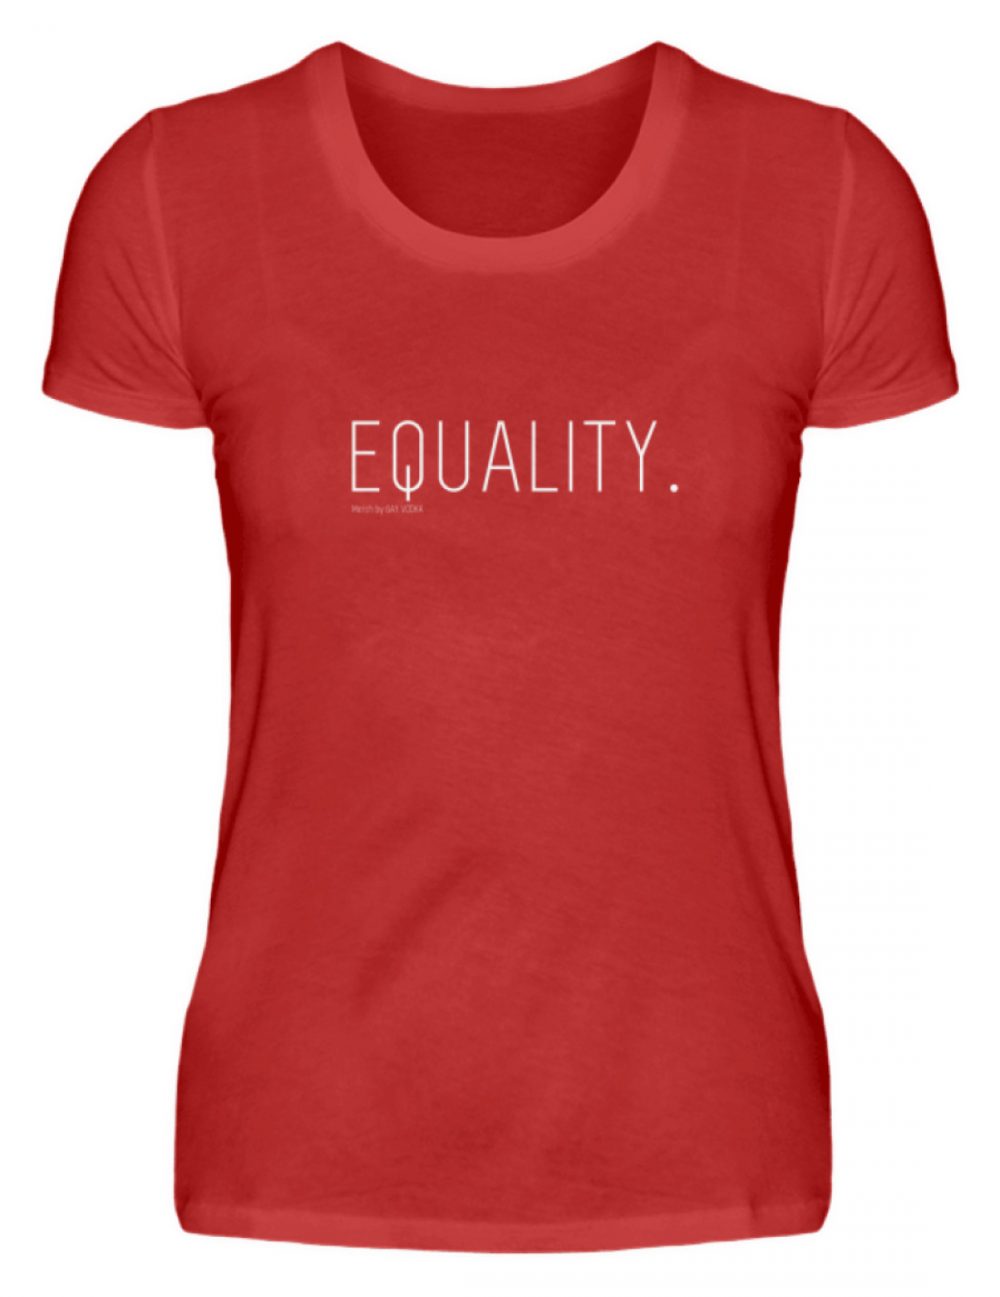 EQUALITY. - Damen Premiumshirt-4